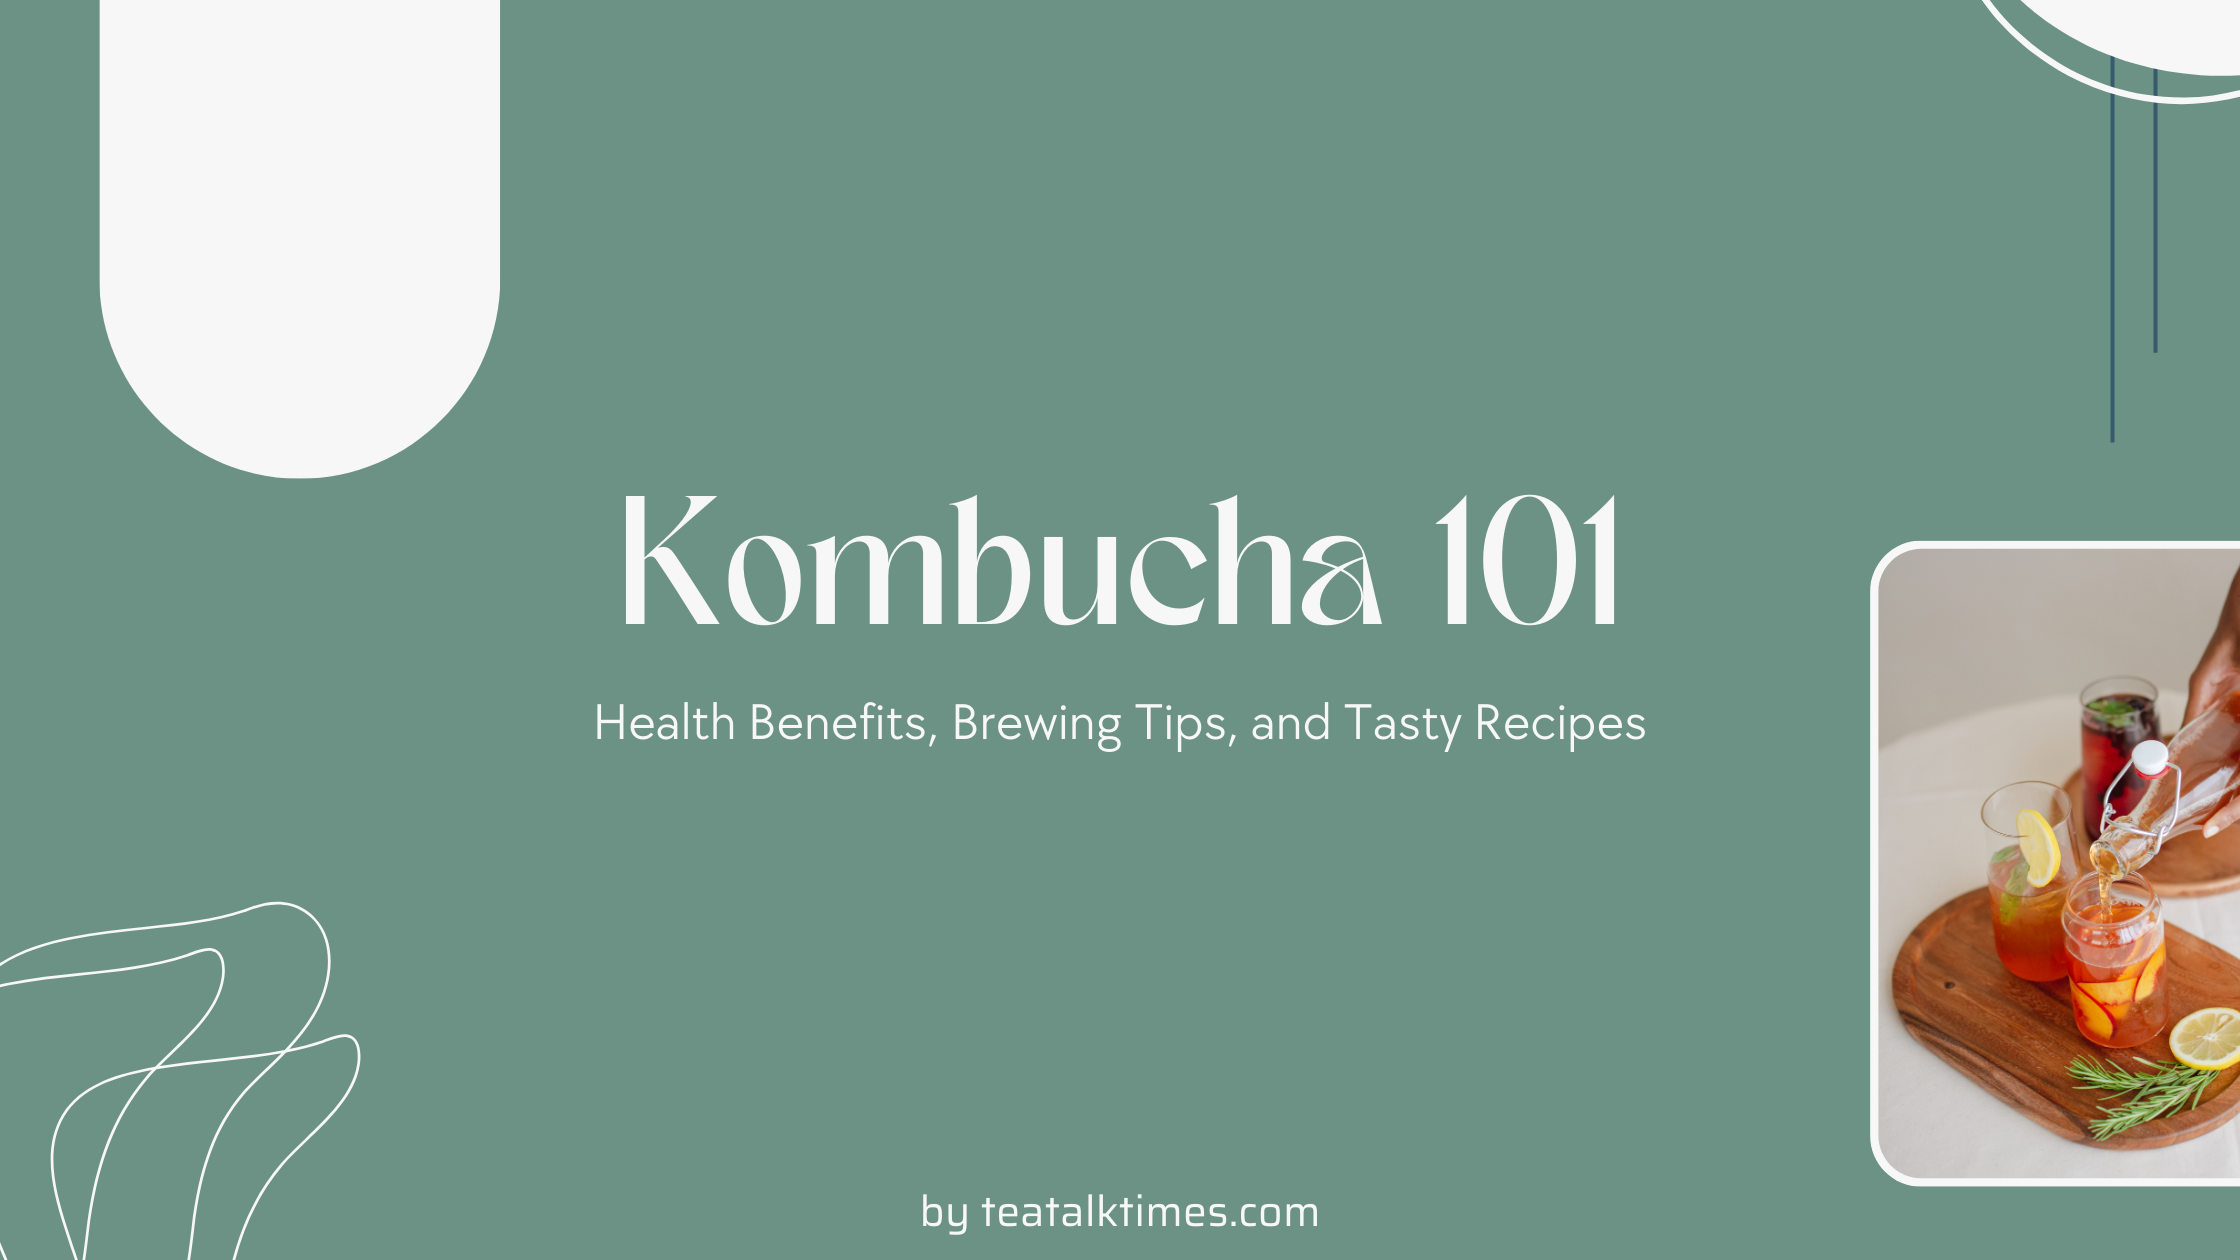 Kombucha 101: Health Benefits, Brewing Tips, and Tasty Recipes